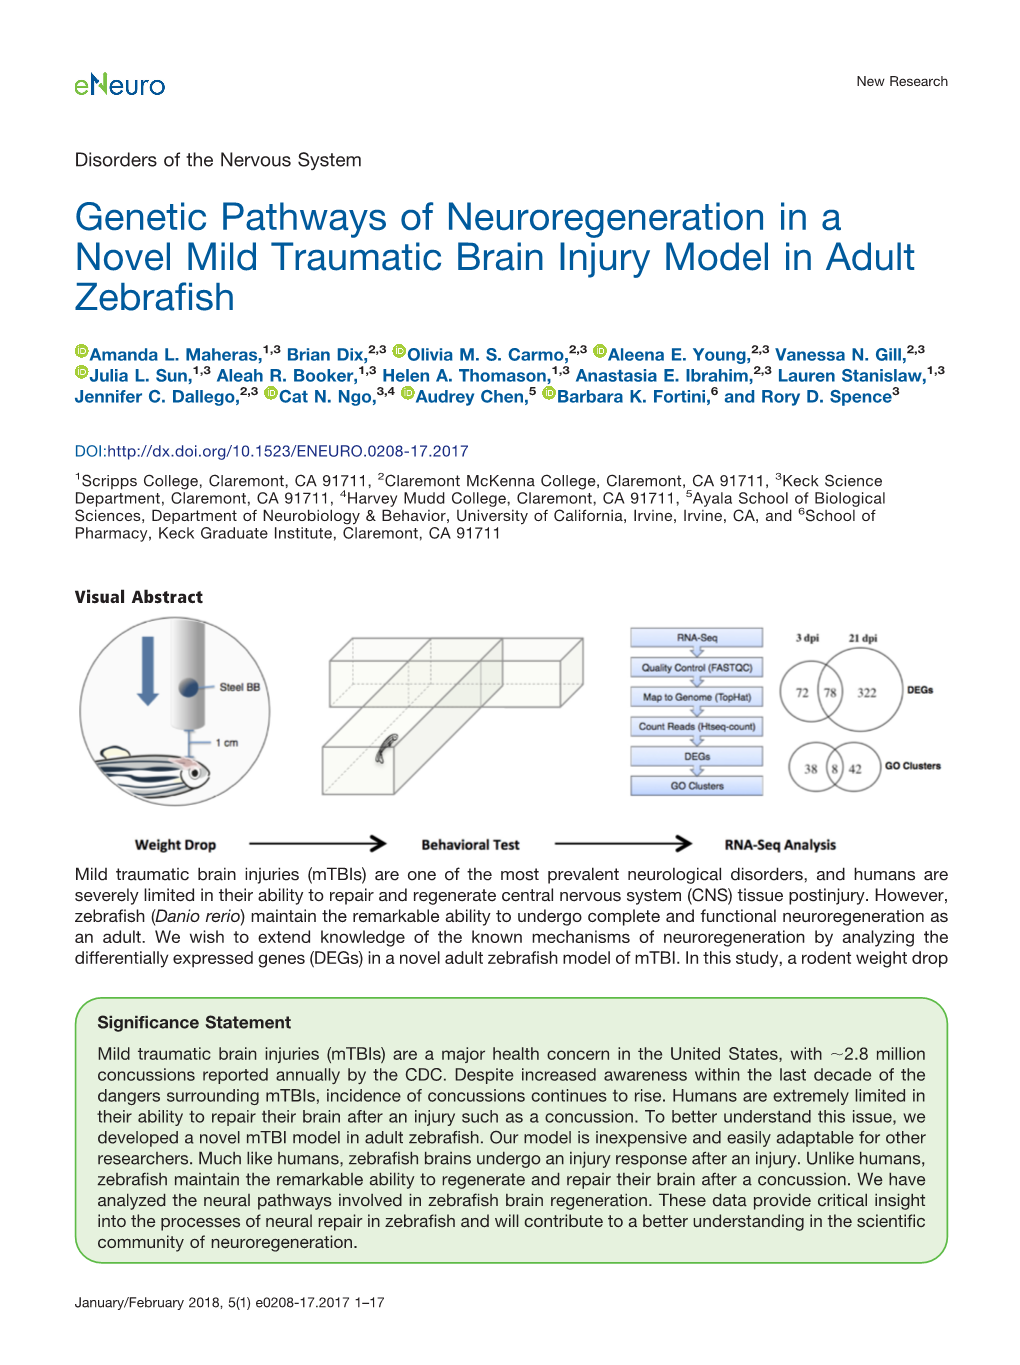 Genetic Pathways of Neuroregeneration in a Novel Mild Traumatic Brain Injury Model in Adult Zebrafish